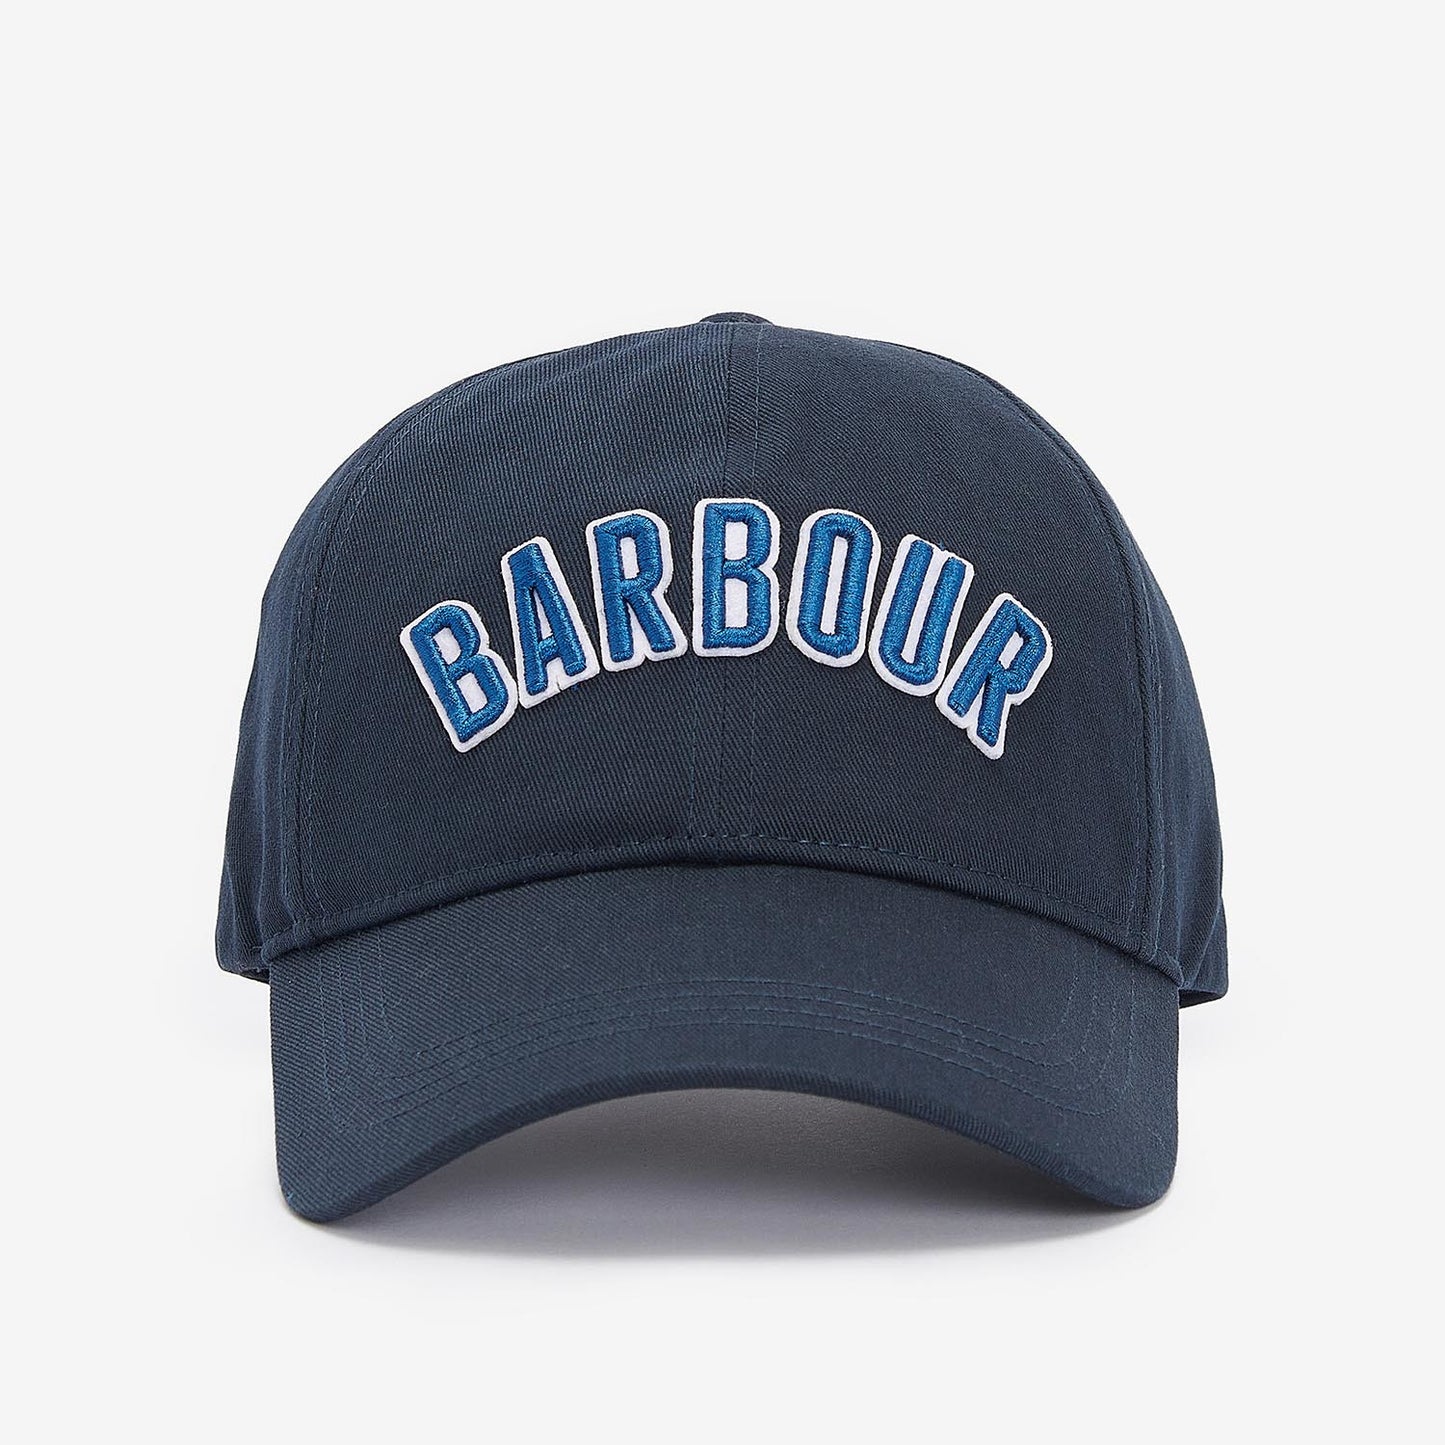 Barbour Campbell Navy Cap